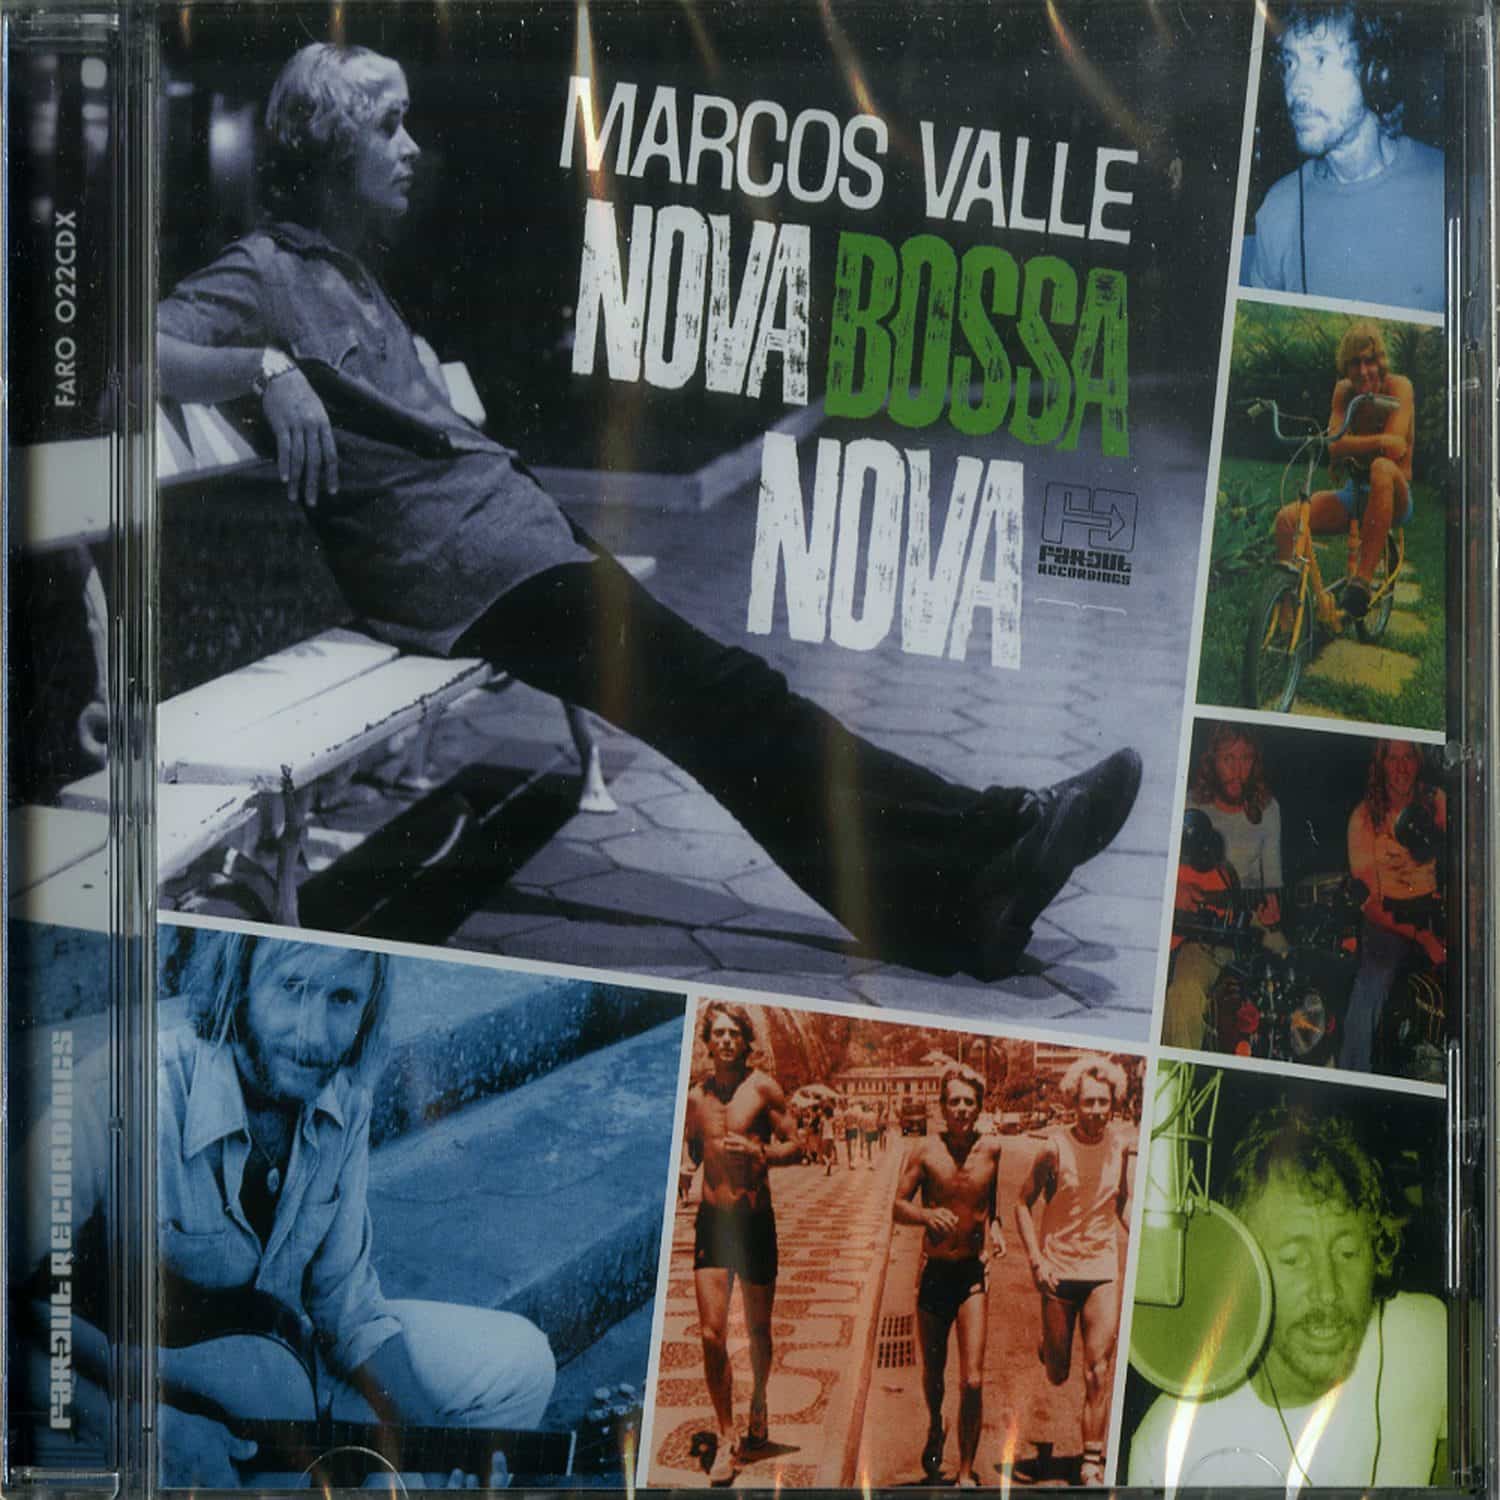 Marcos Valle - NOVA BOSSA NOVA 